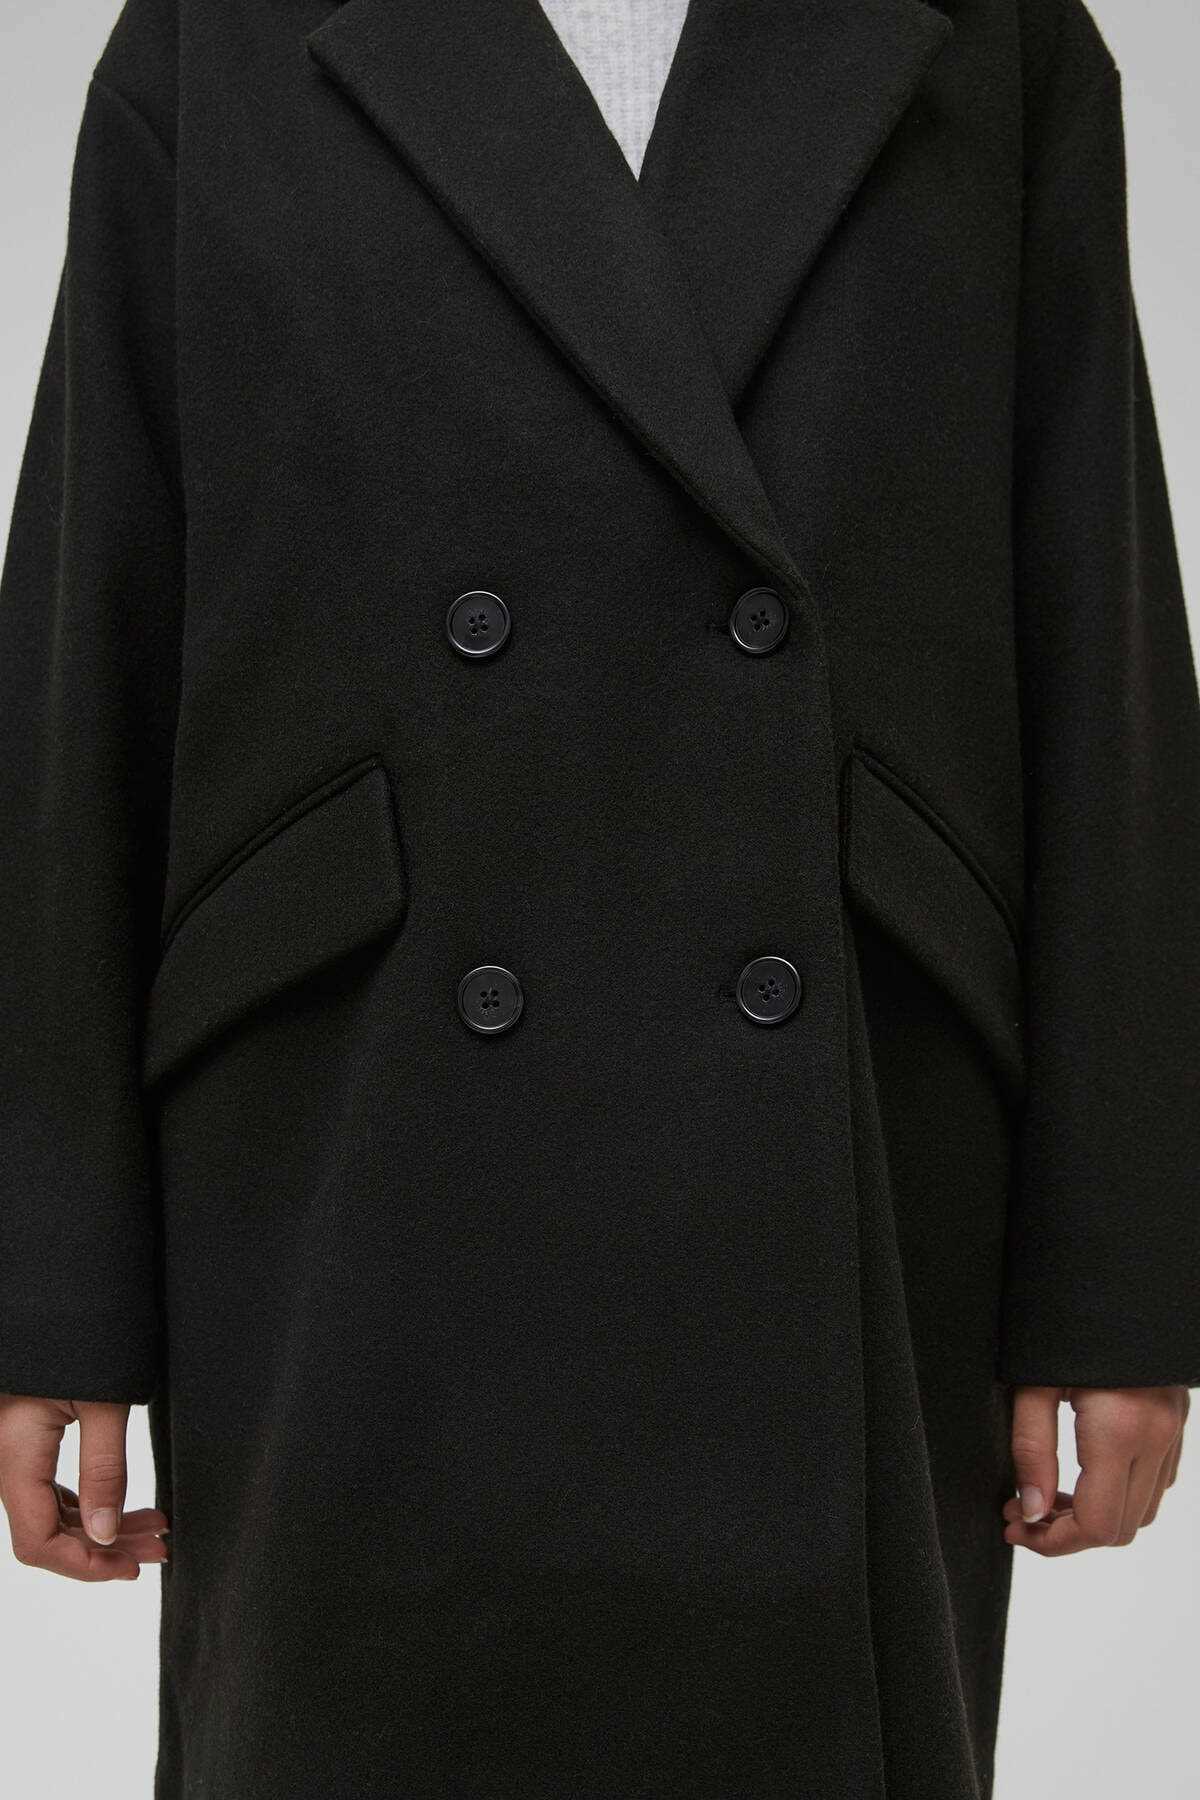 پالتو زمستانی زنانه برند Pull & Bear رنگ مشکی کد ty67129356